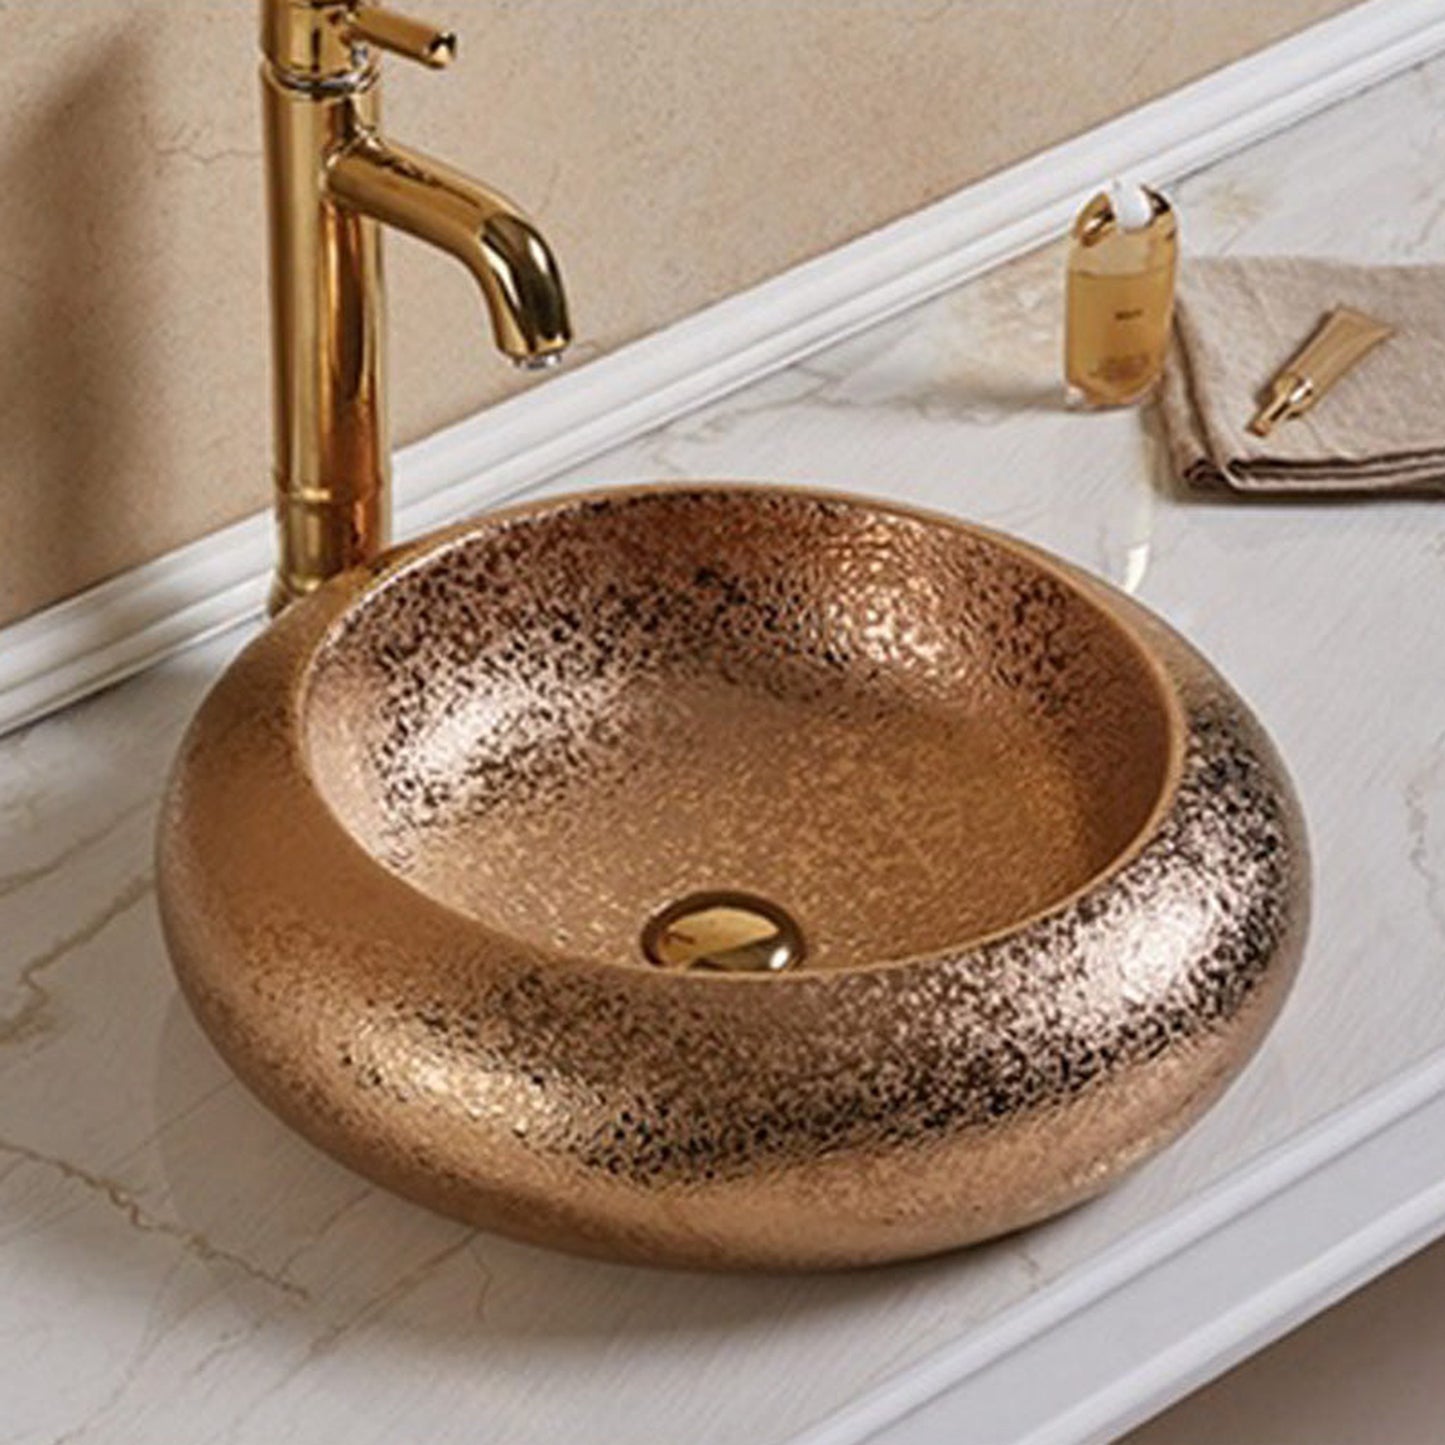 American Imaginations AI-27921 Round Oil Rubbed Bronze Ceramic Bathroom Vessel Sink with Enamel Glaze Finish